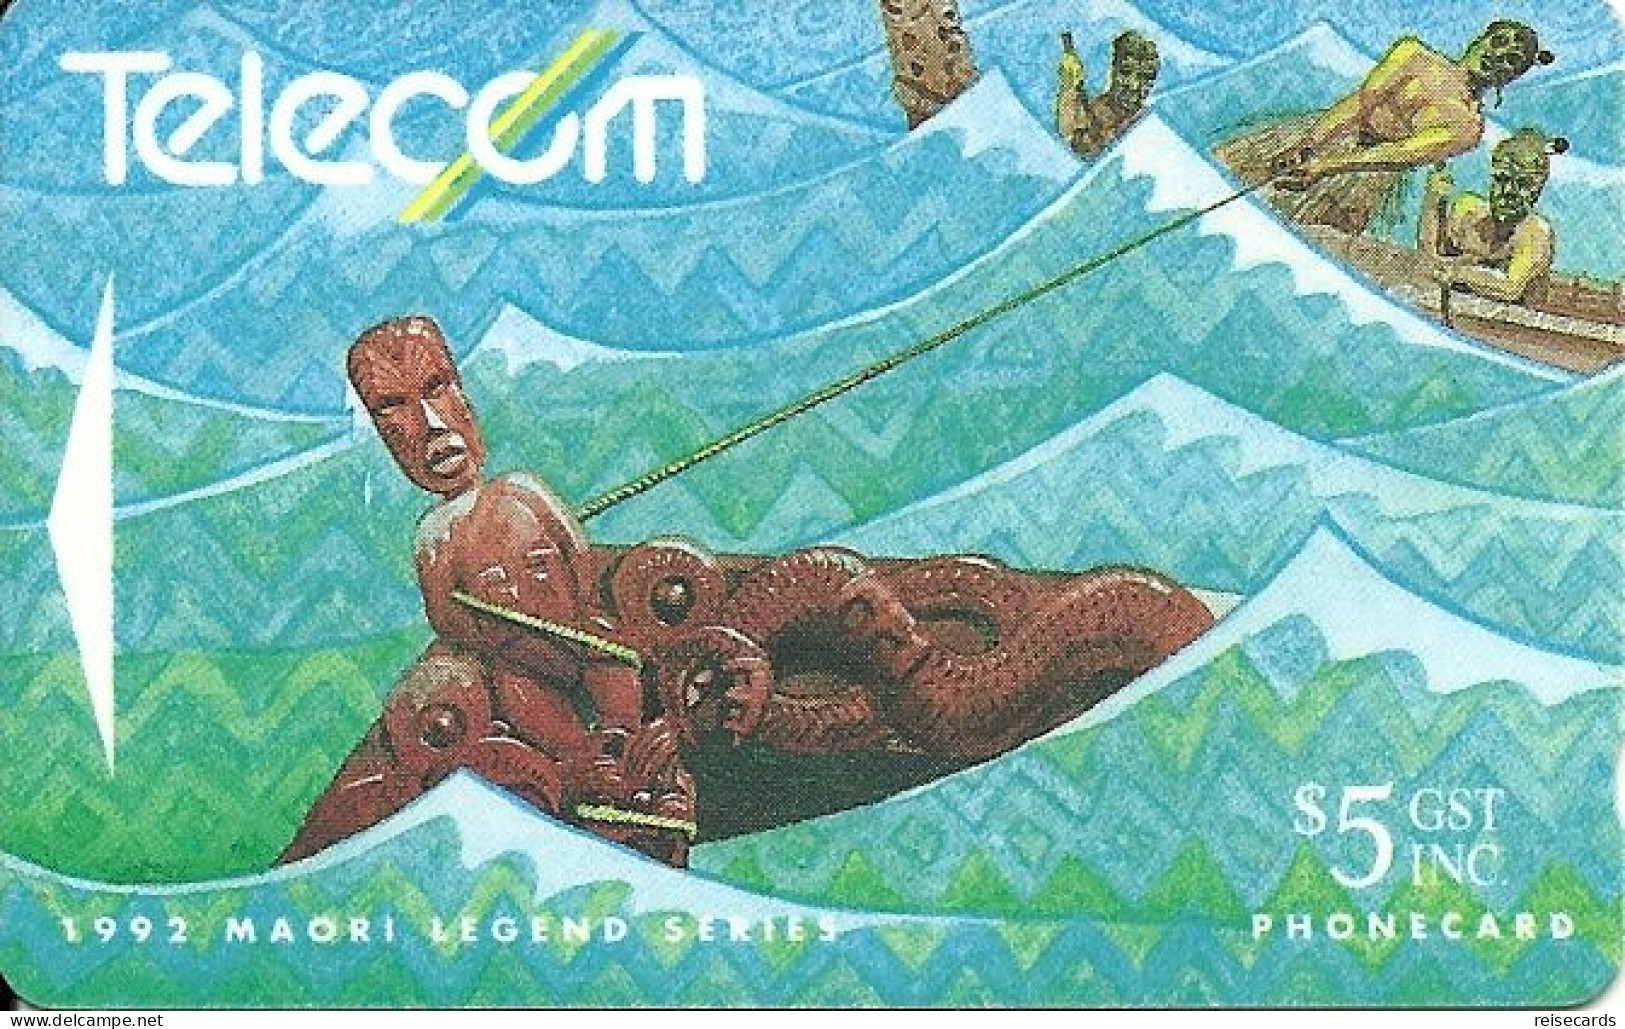 New Zealand: Telecom - 1992 Maori Legend , Maui Fishes Up The North Island - Nieuw-Zeeland